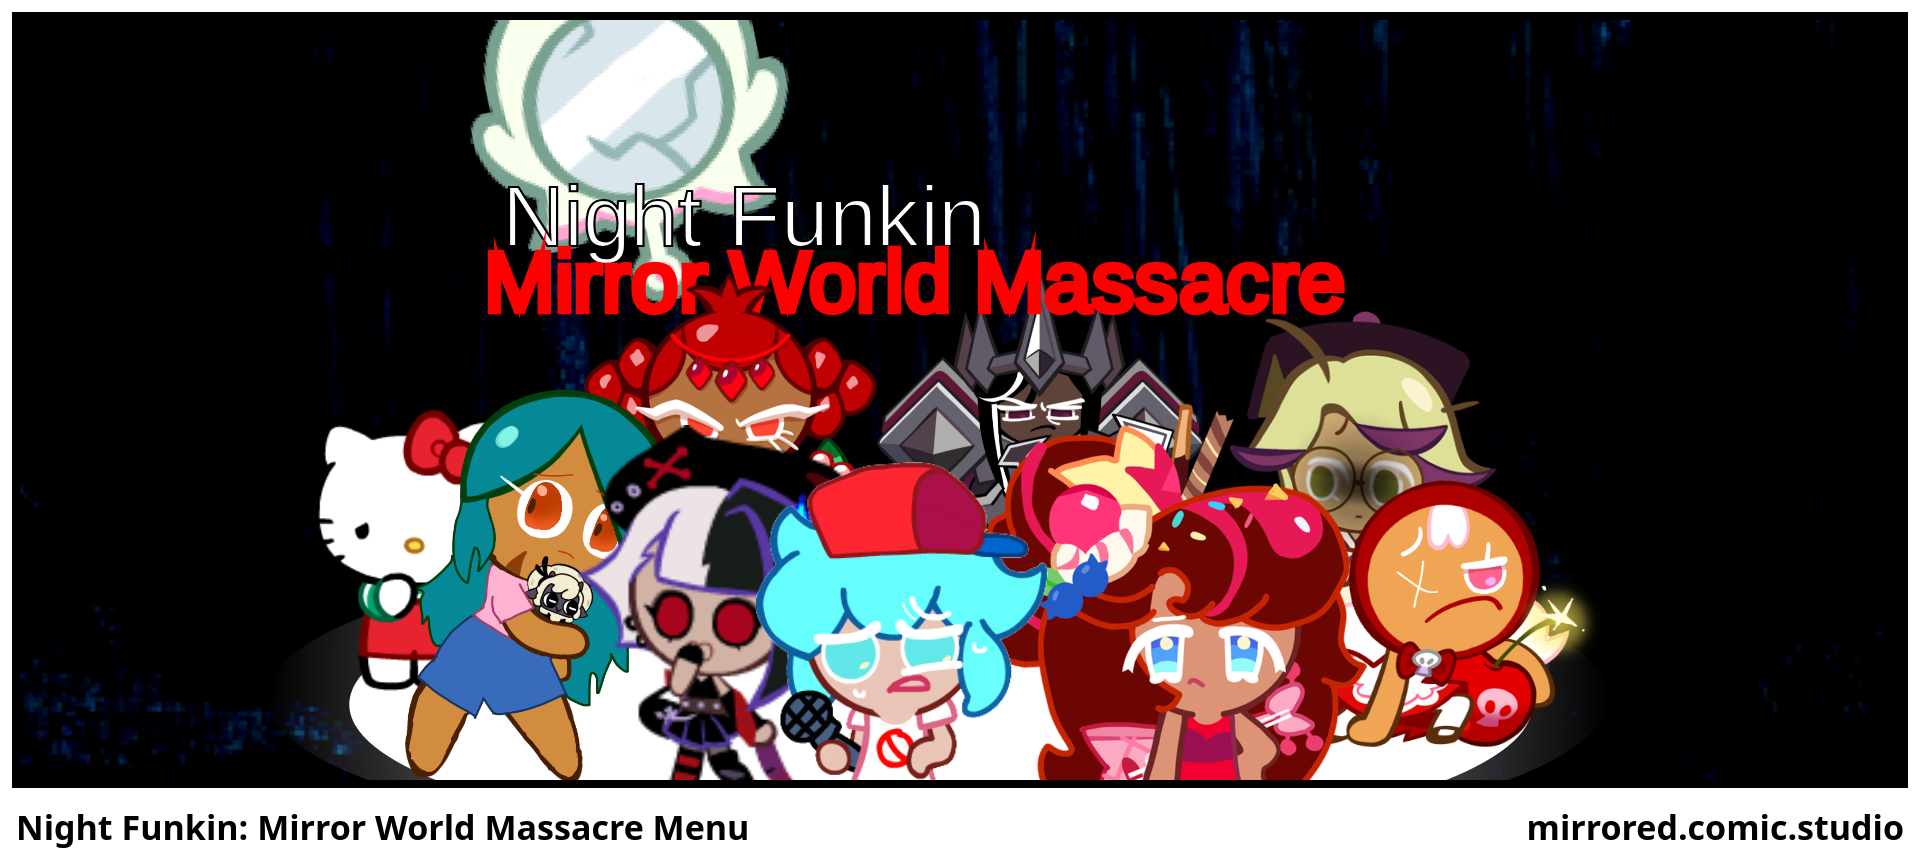 Night Funkin: Mirror World Massacre Menu